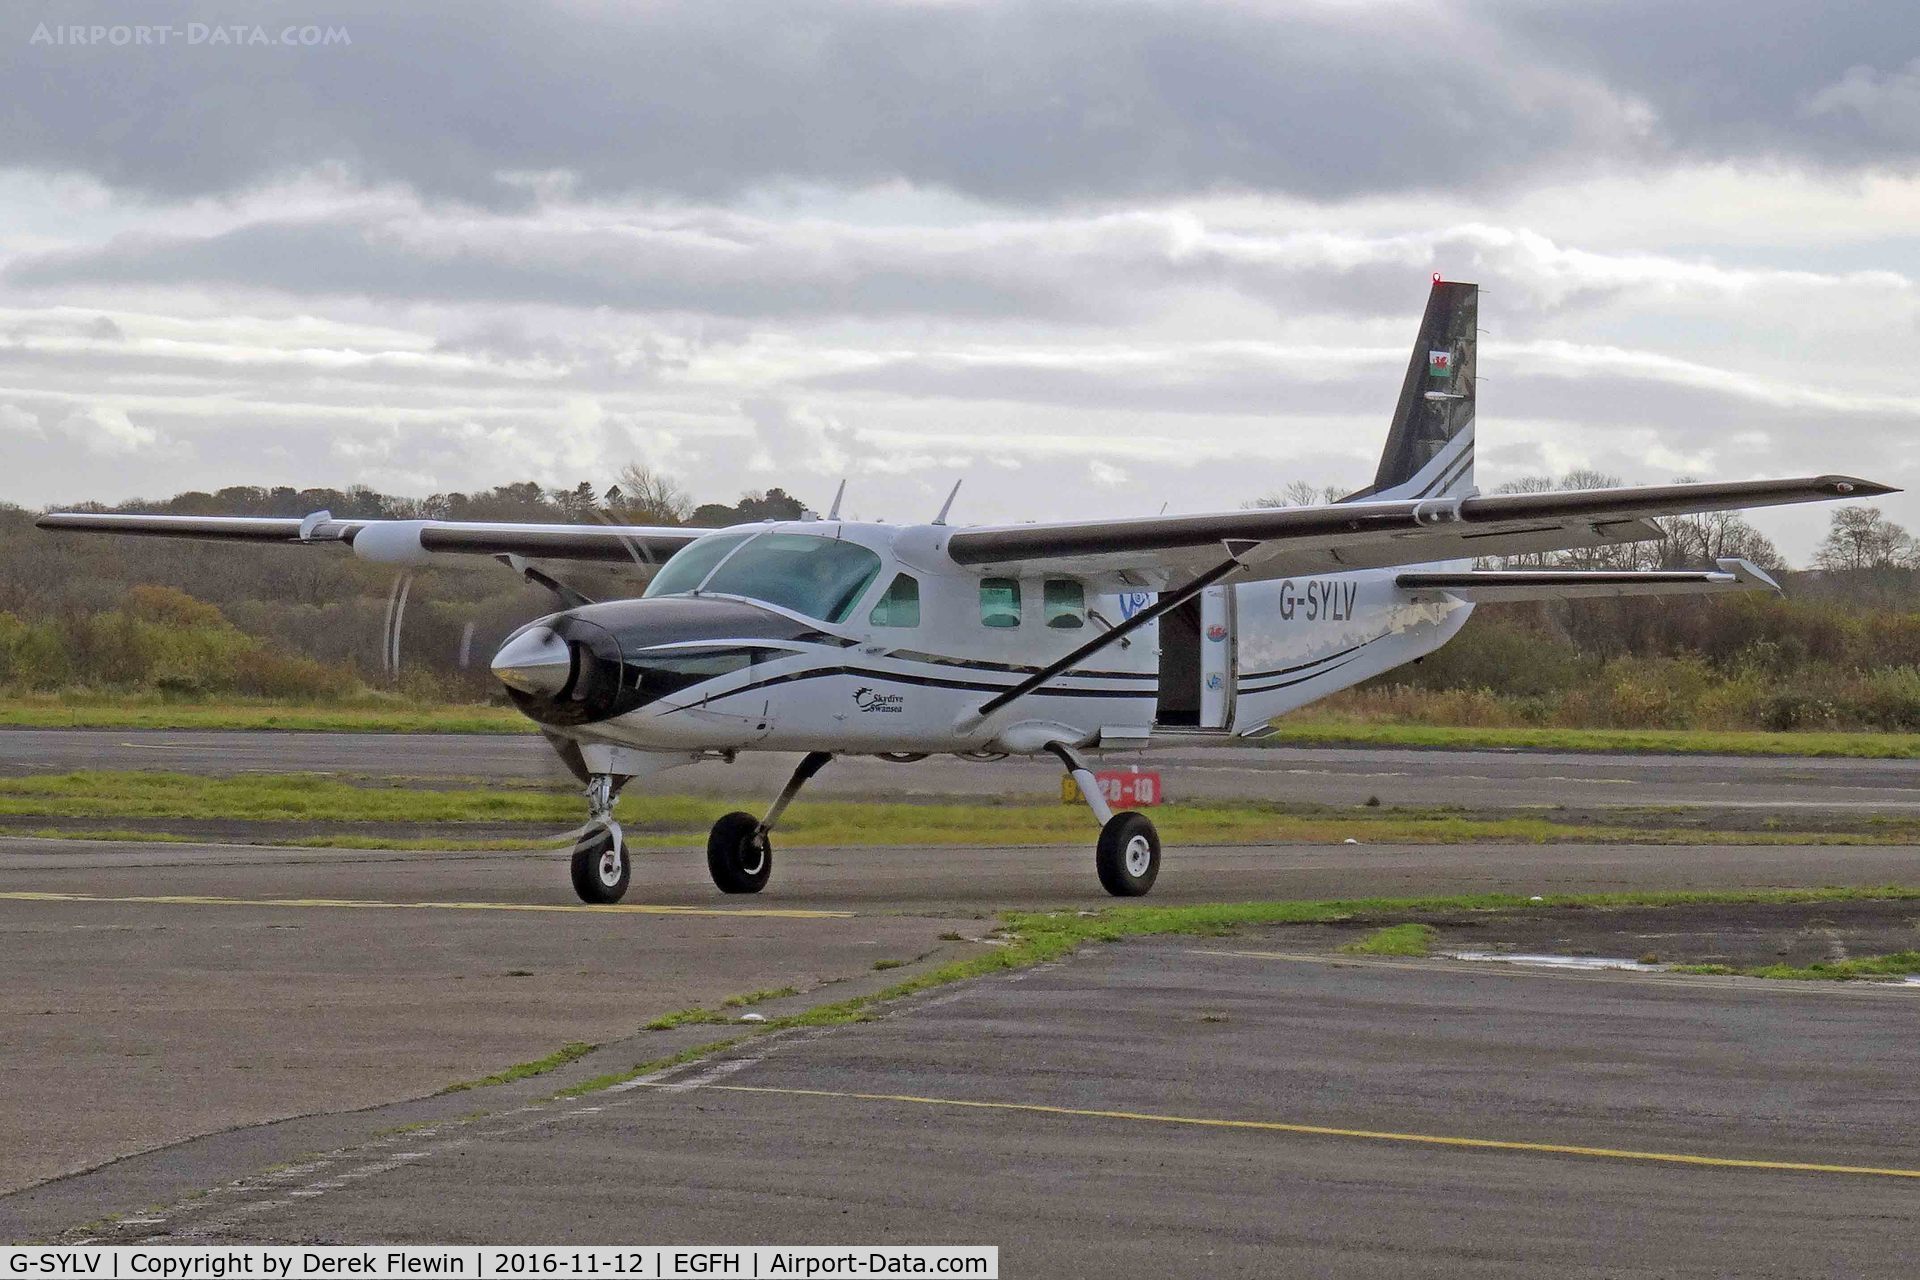 G-SYLV, 2002 Cessna 208B  Grand Caravan C/N 208B0936, Grand Caravan, Skydive Swansea, previously N40753, EC-IEV, D-FAAH, UR-CEGC, D-FAAH, seen taxxing in following parachute operations.